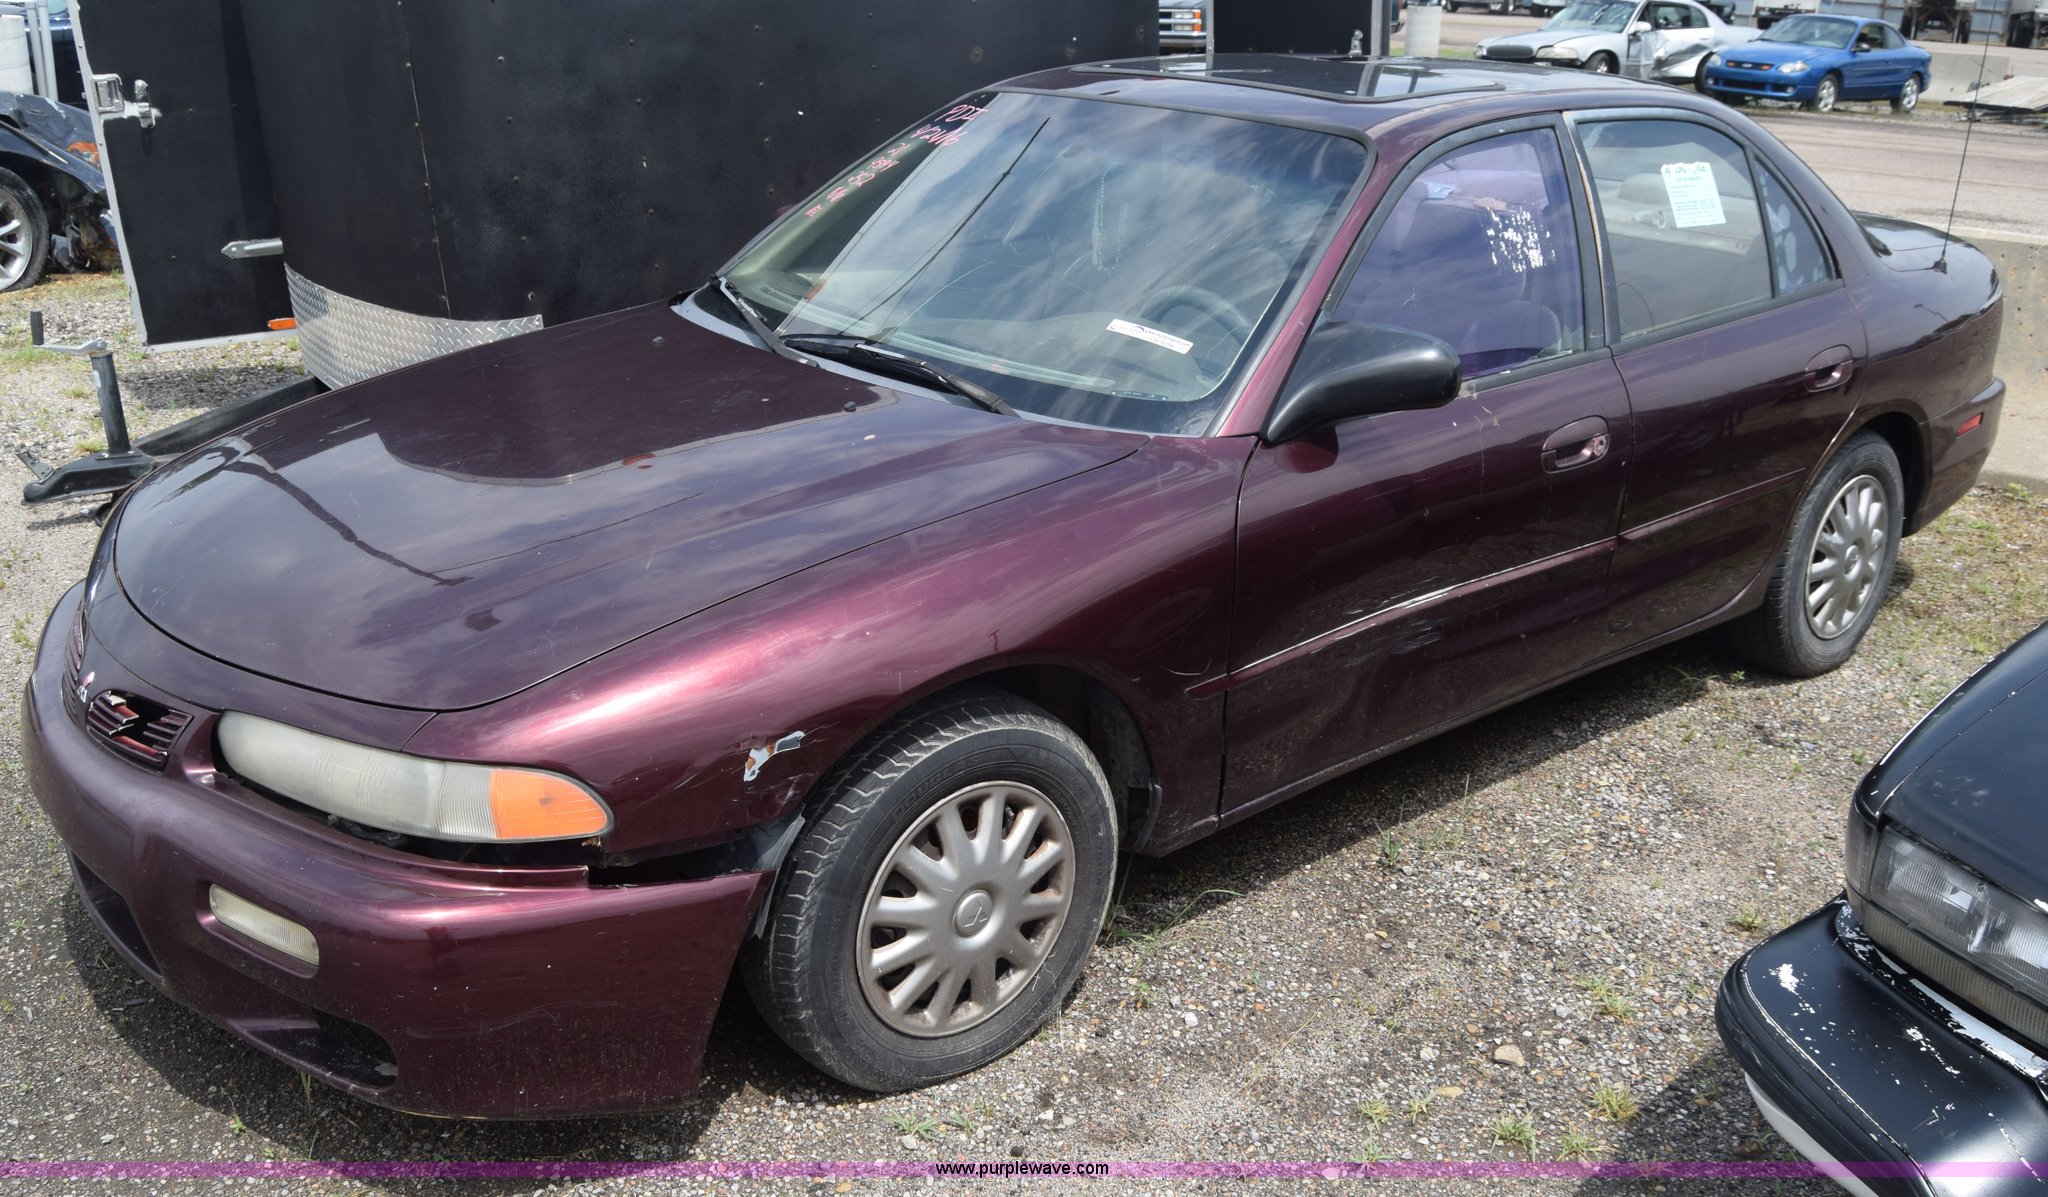 1997 Mitsubishi Galant in Wichita, KS | Item CB9298 sold | Purple Wave